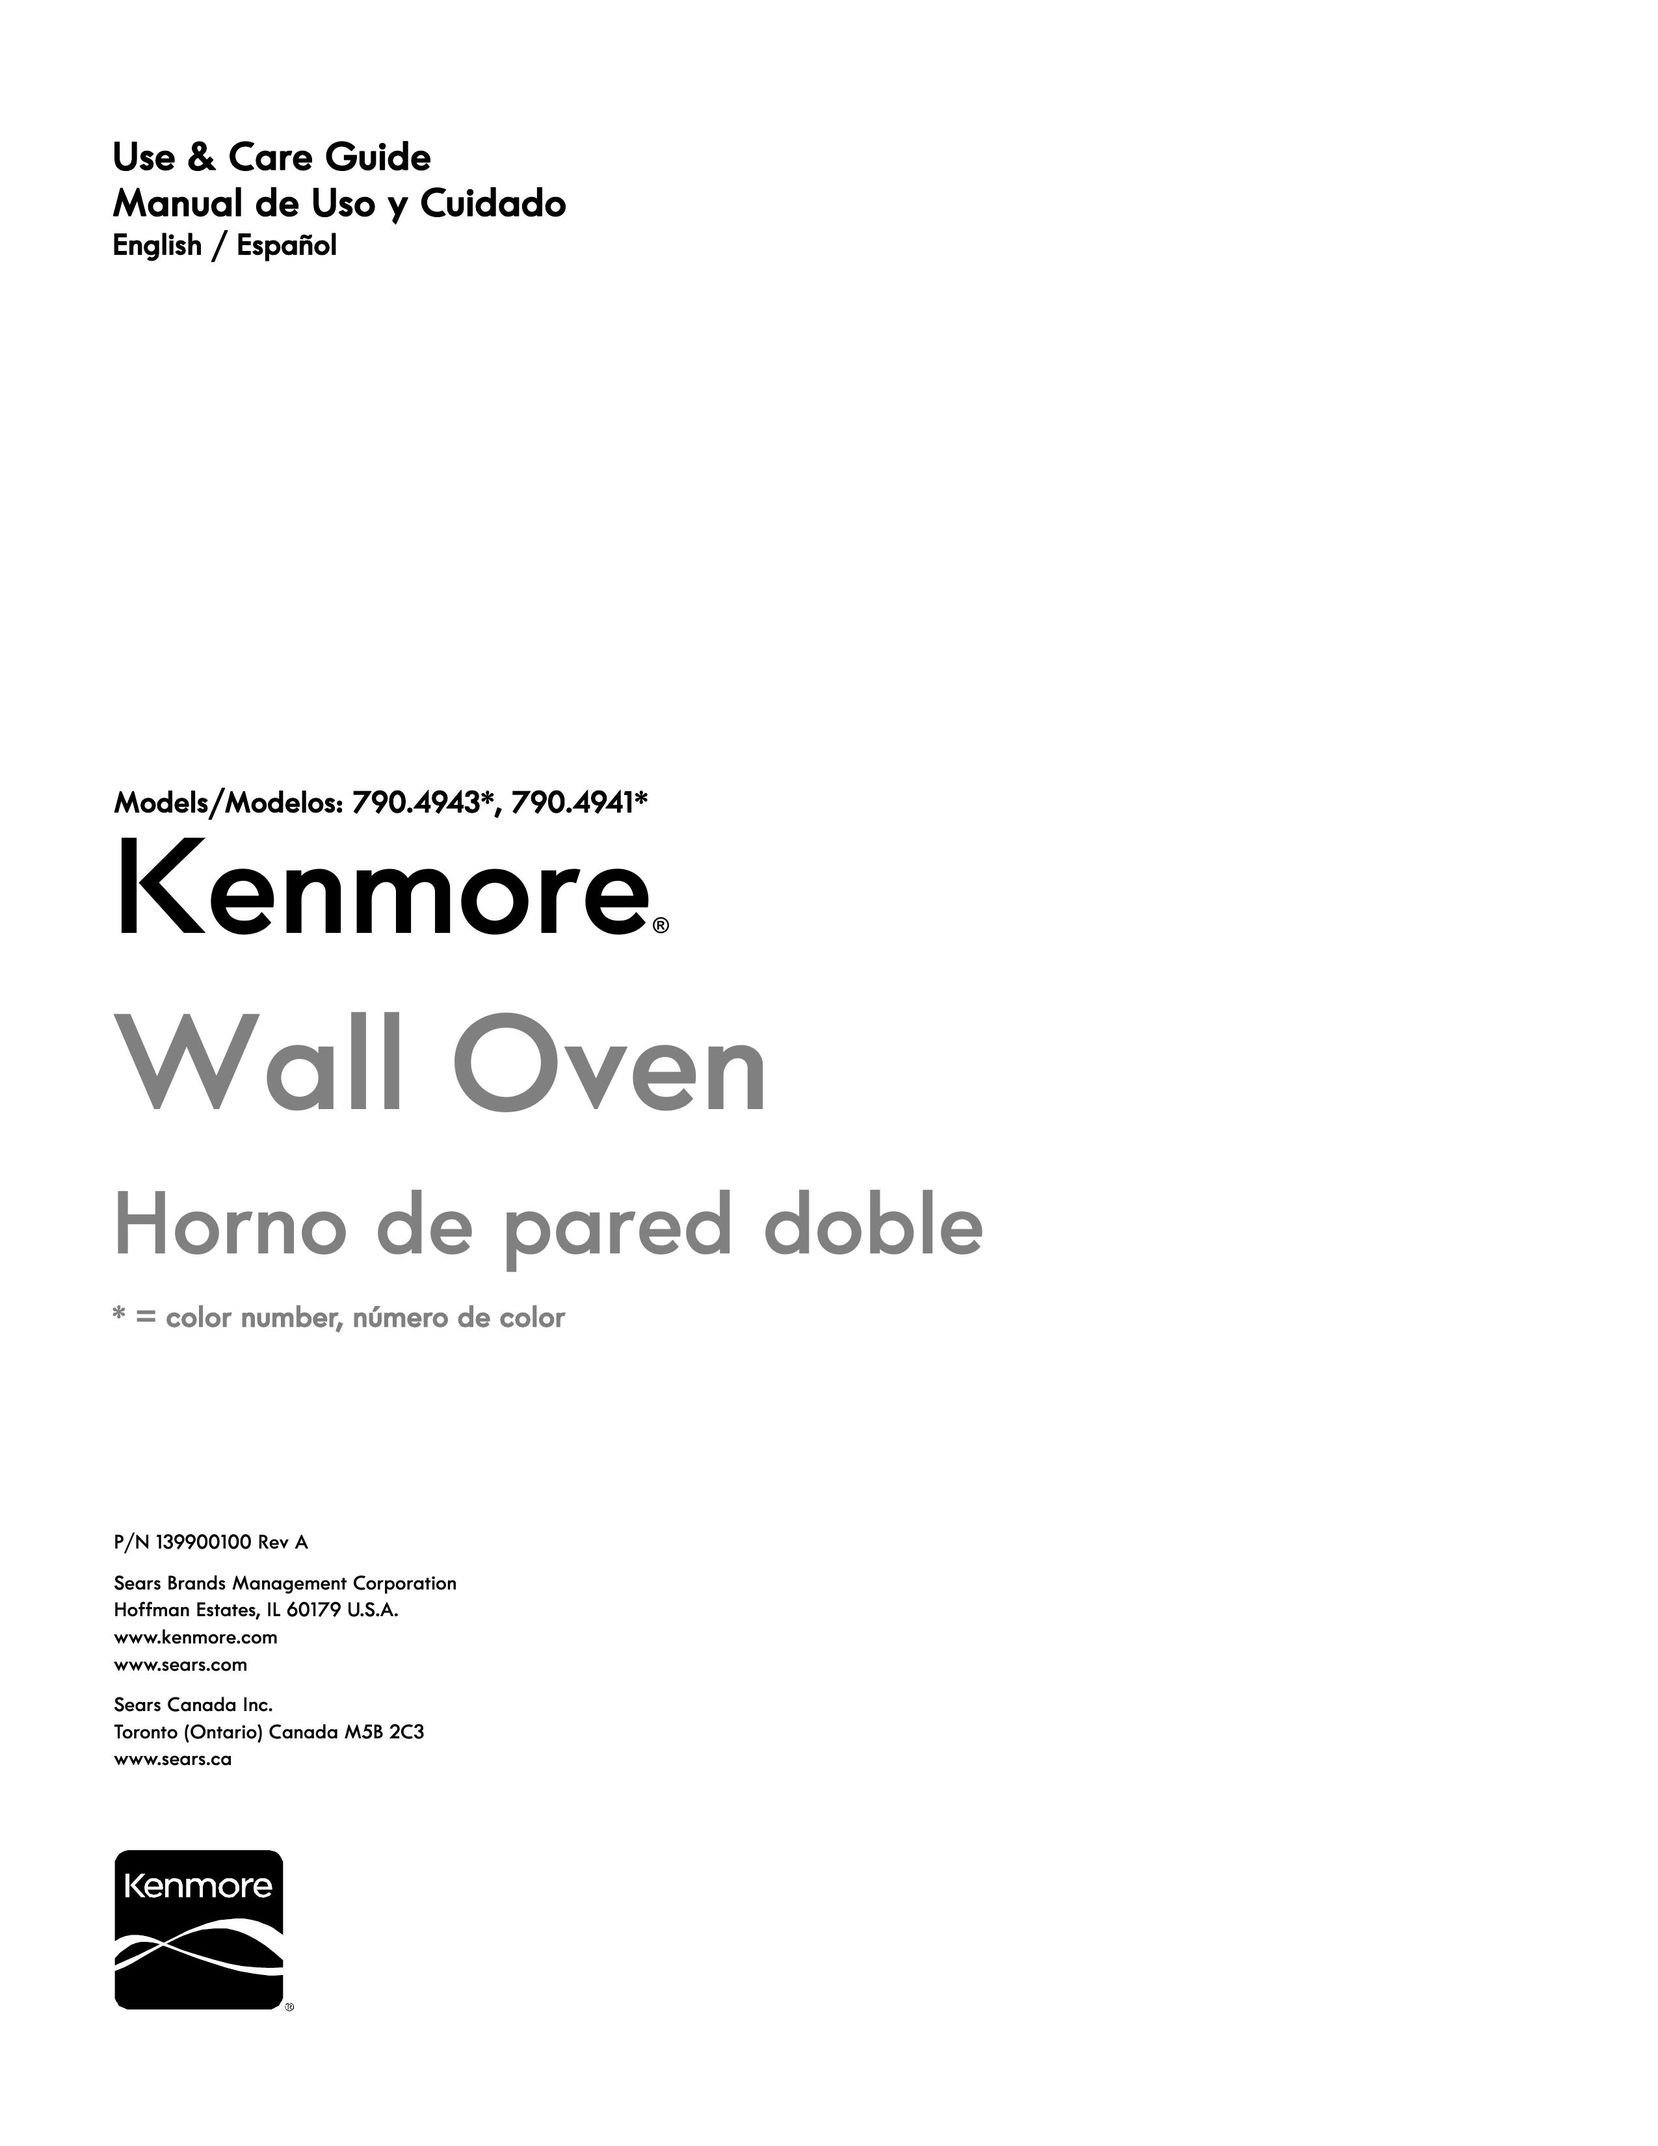 Kenmore 790.4941 Oven User Manual